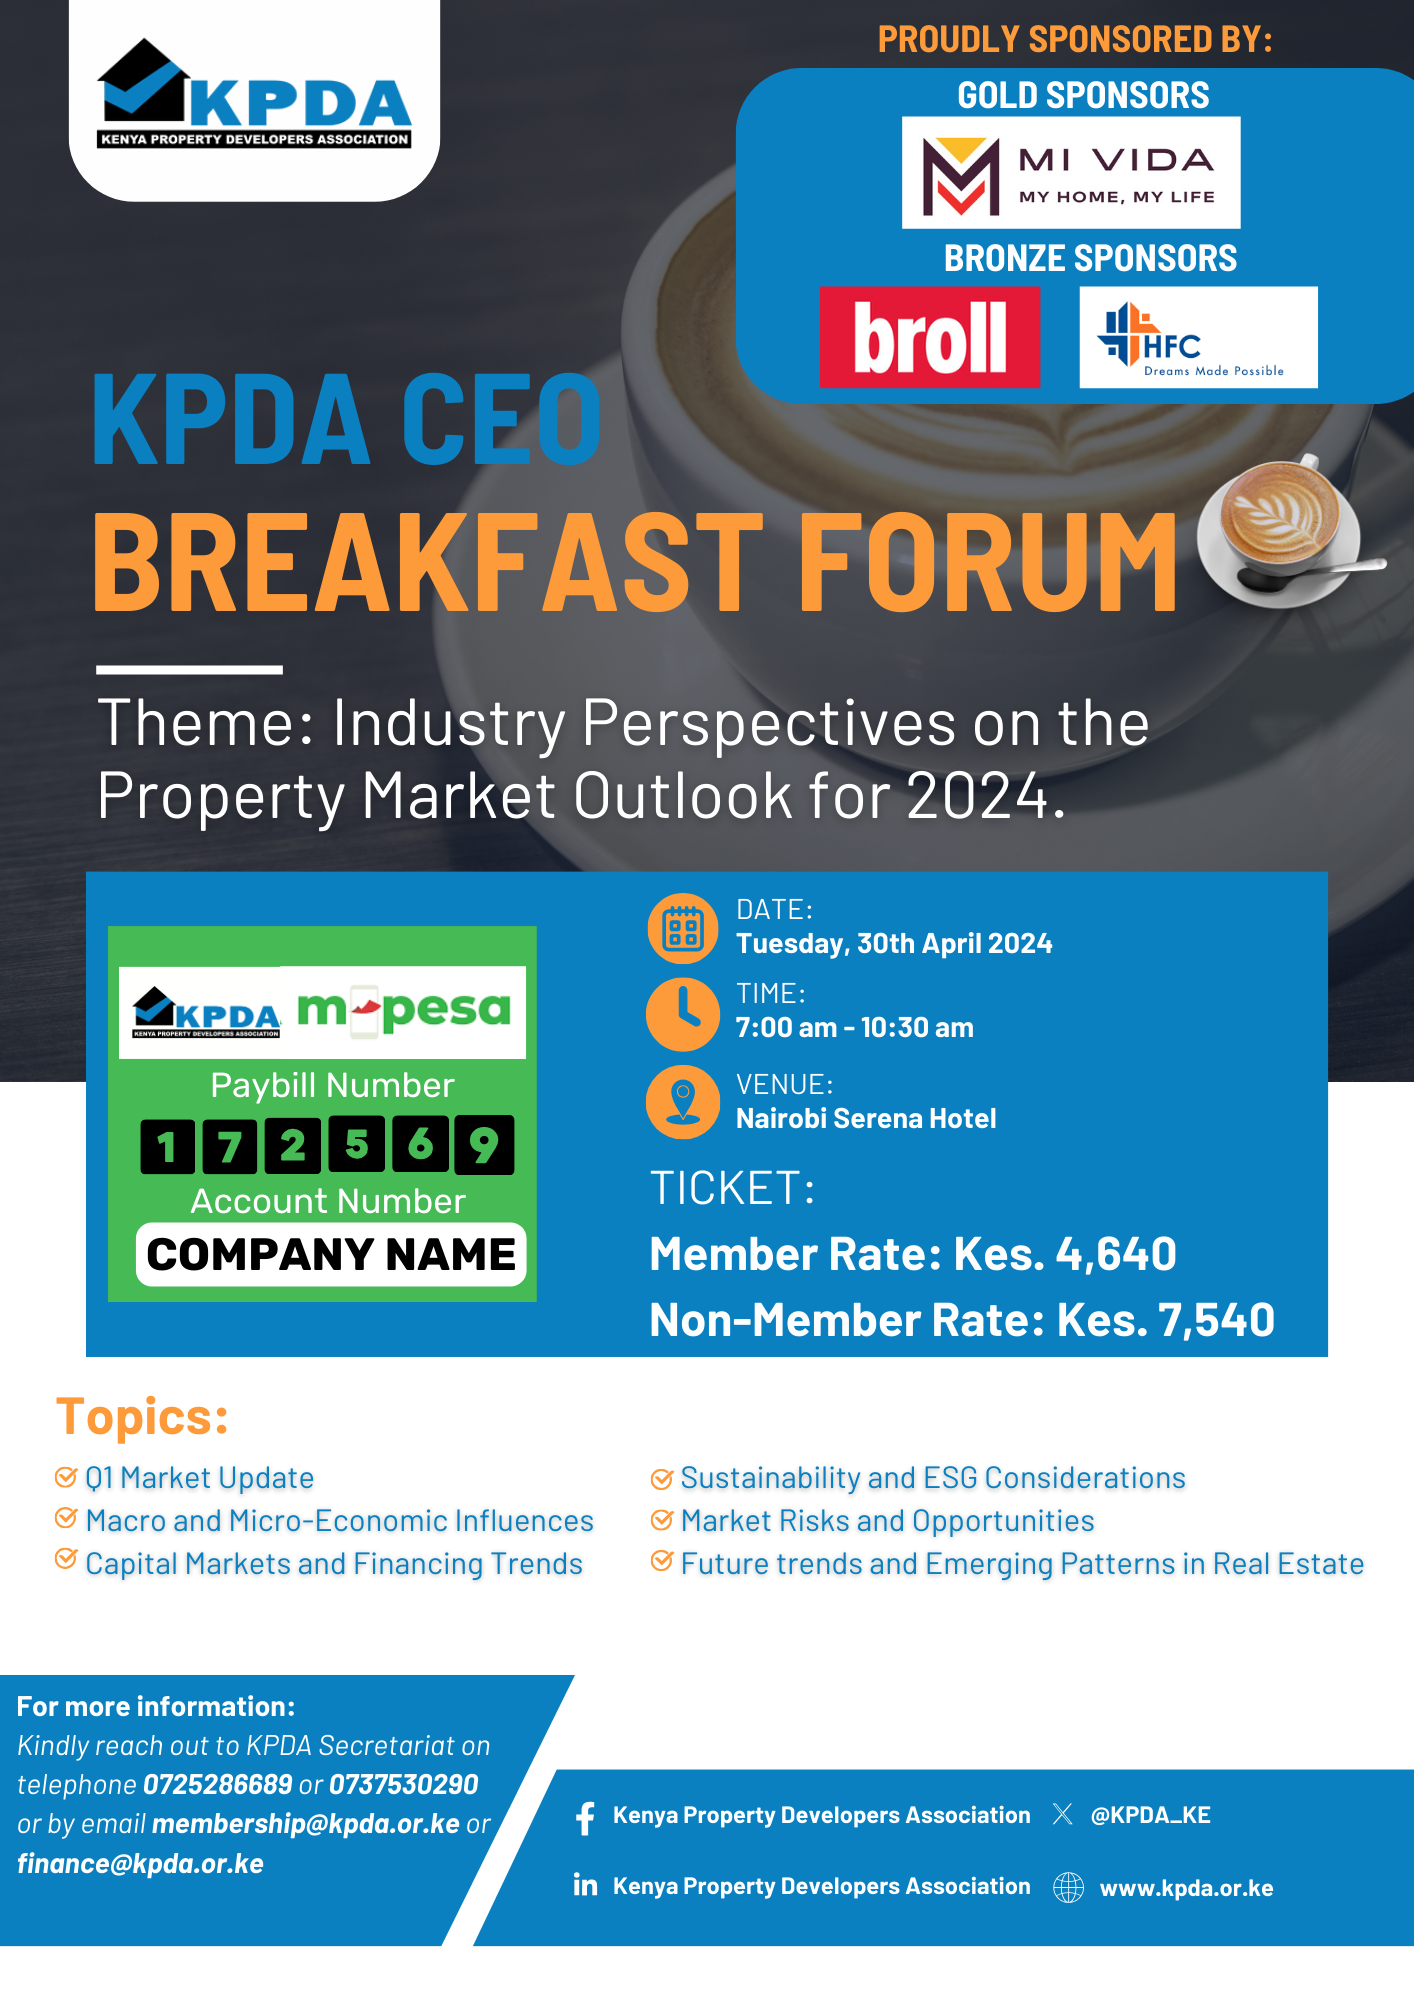 KPDA CEO Breakfast Forum Invitation List with Sponsors